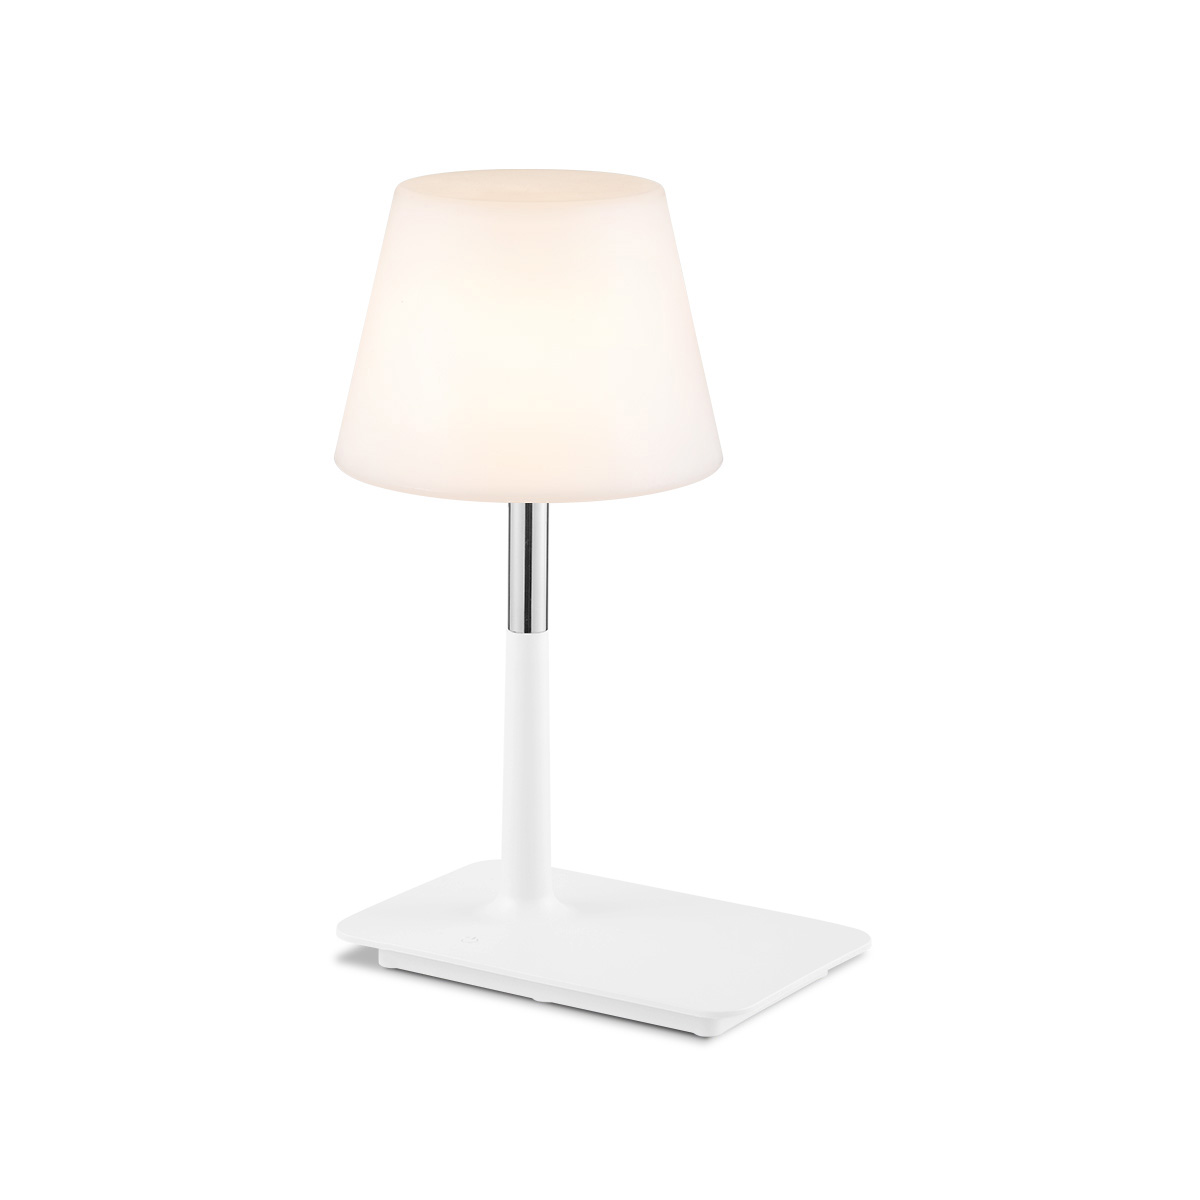 Tangla lighting - TLT7639-01WT - LED table lamp - rechargeable plastic - white - square